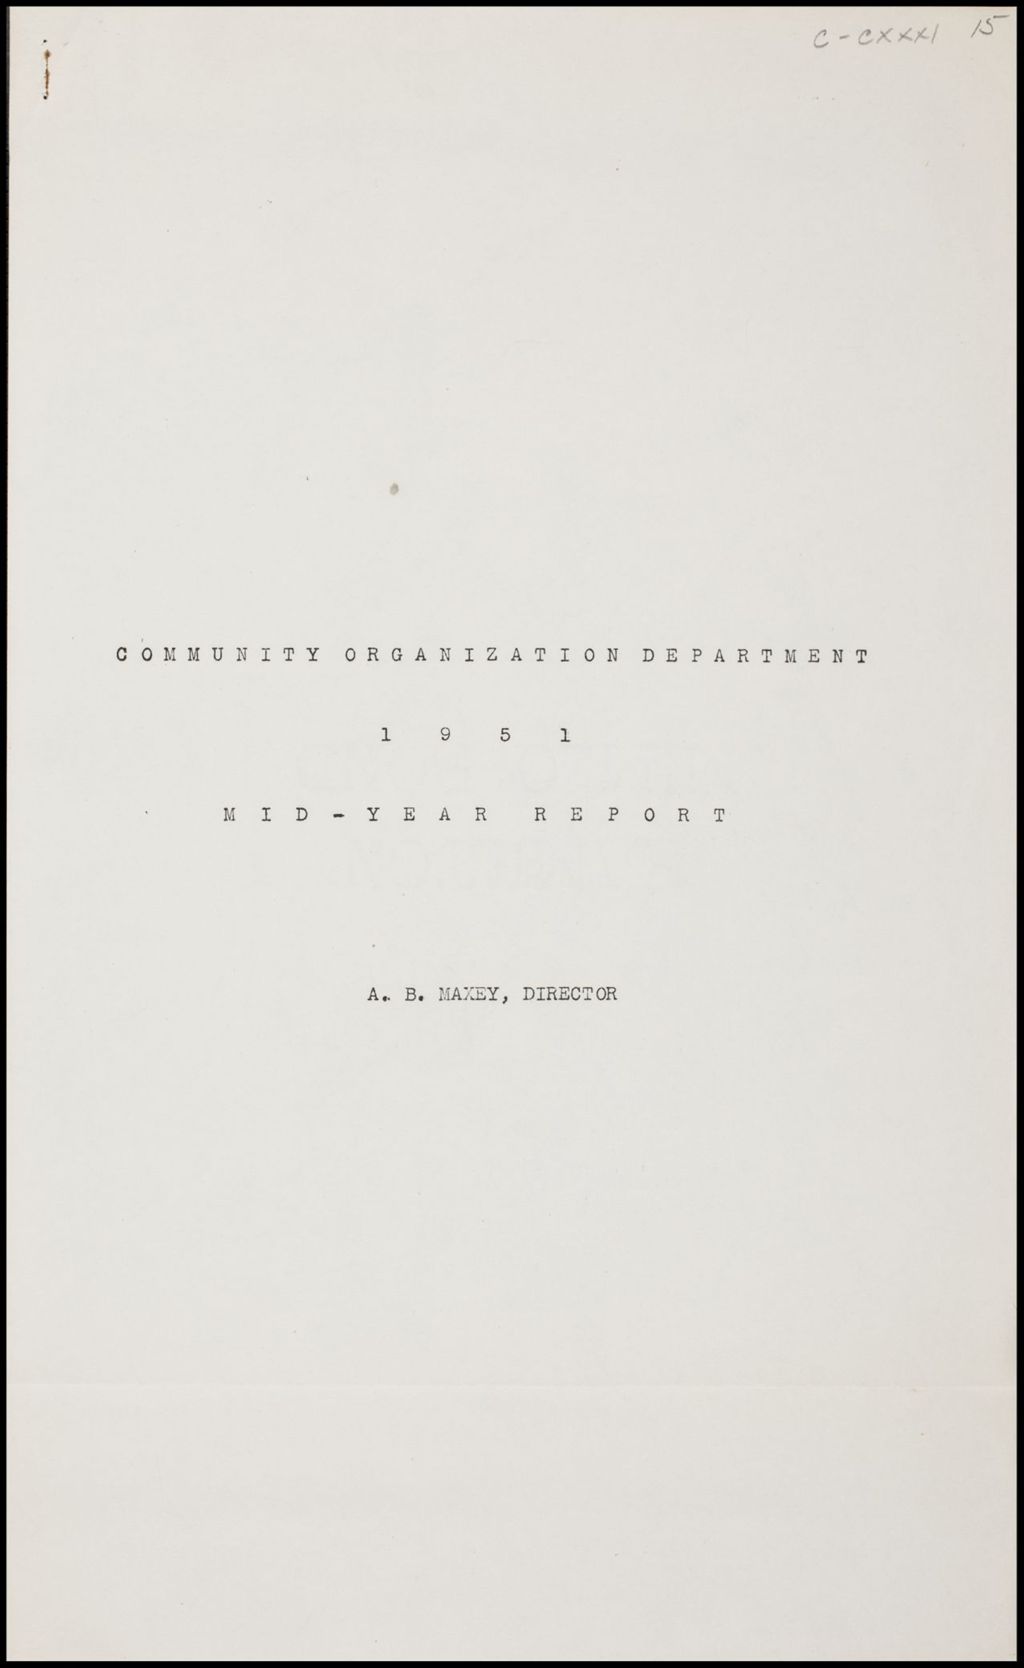 Miniature of Annual Reports, 1951-1954 (Folder II-2182)